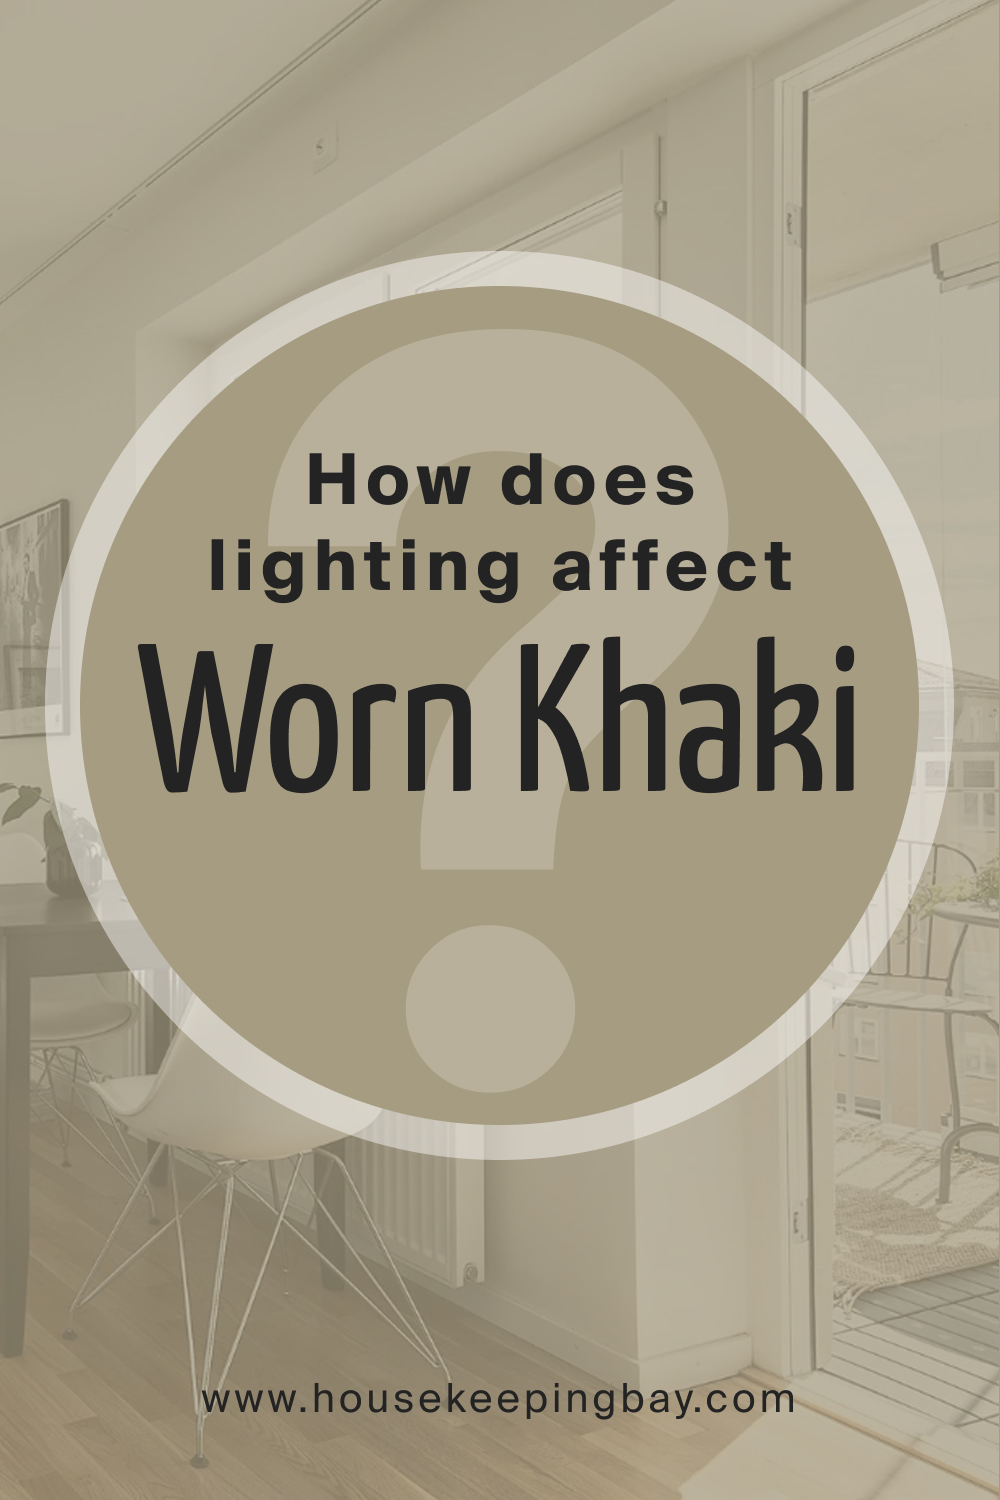 How does lighting affect SW 9527 Worn Khaki